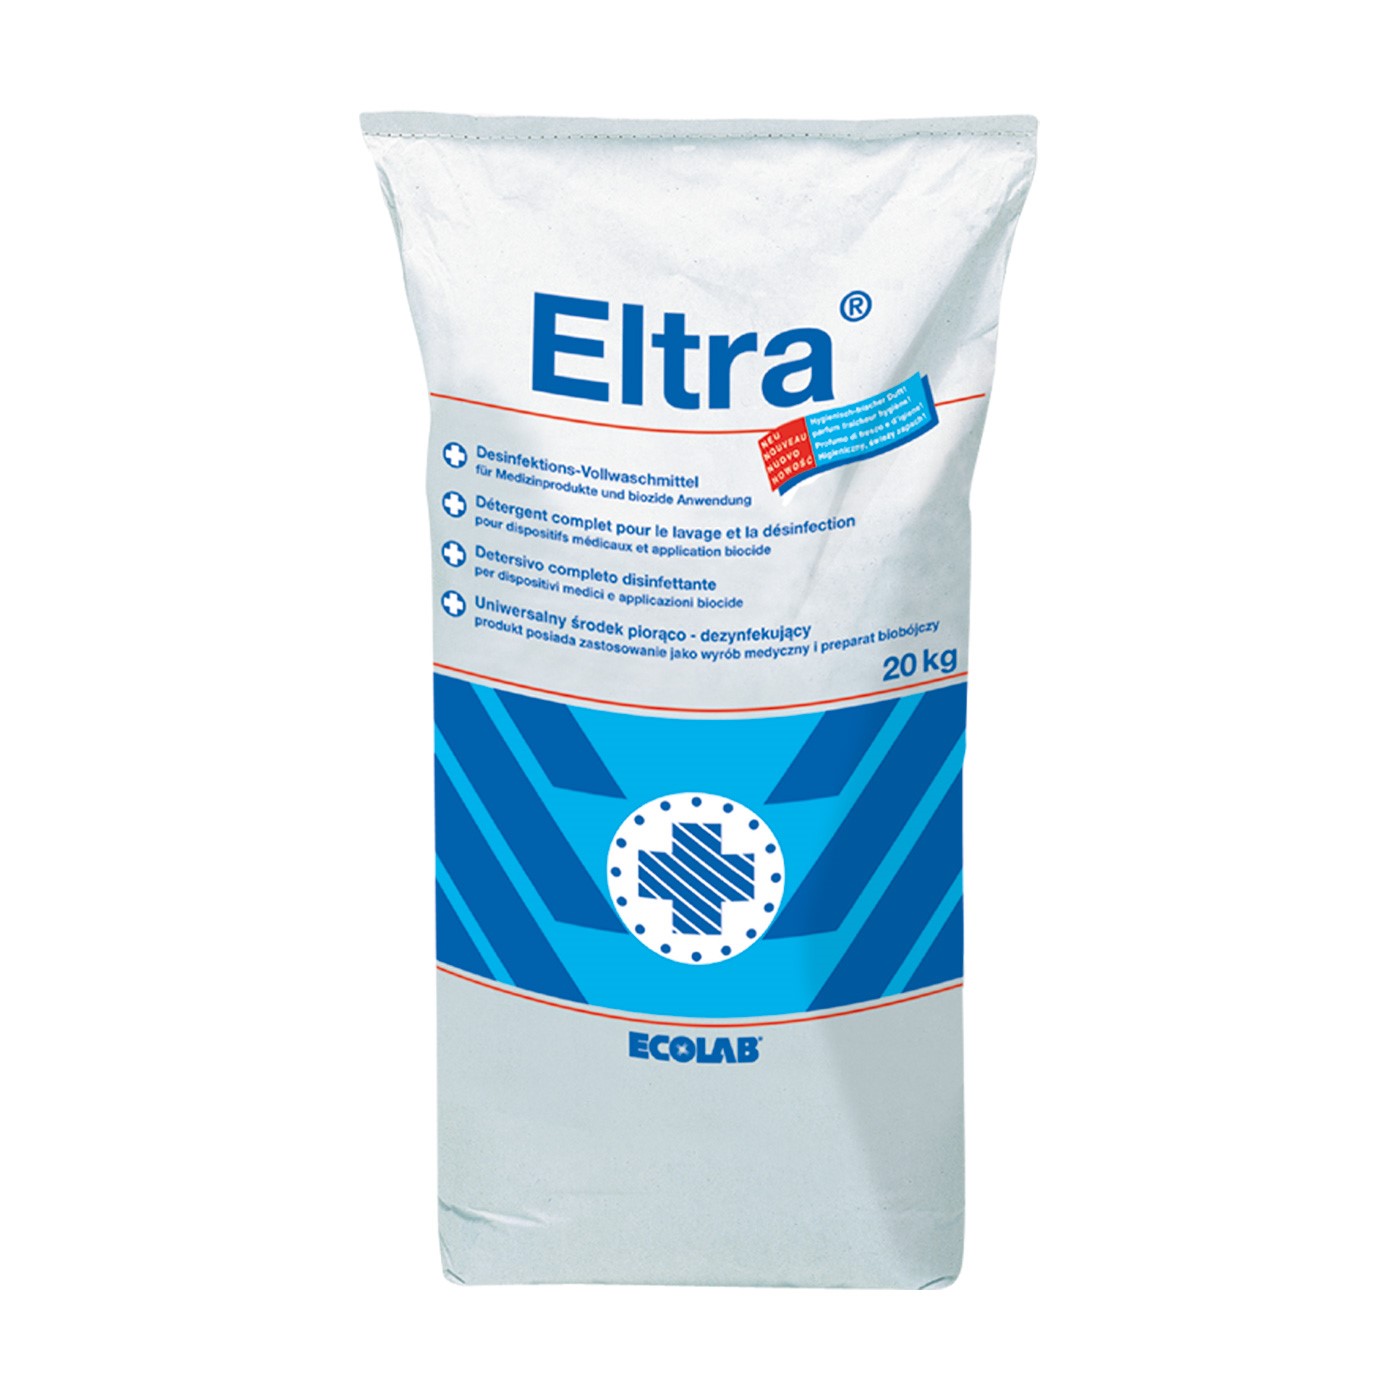 Eltra Desinfektions-Vollwaschmittel, 20 kg Sack